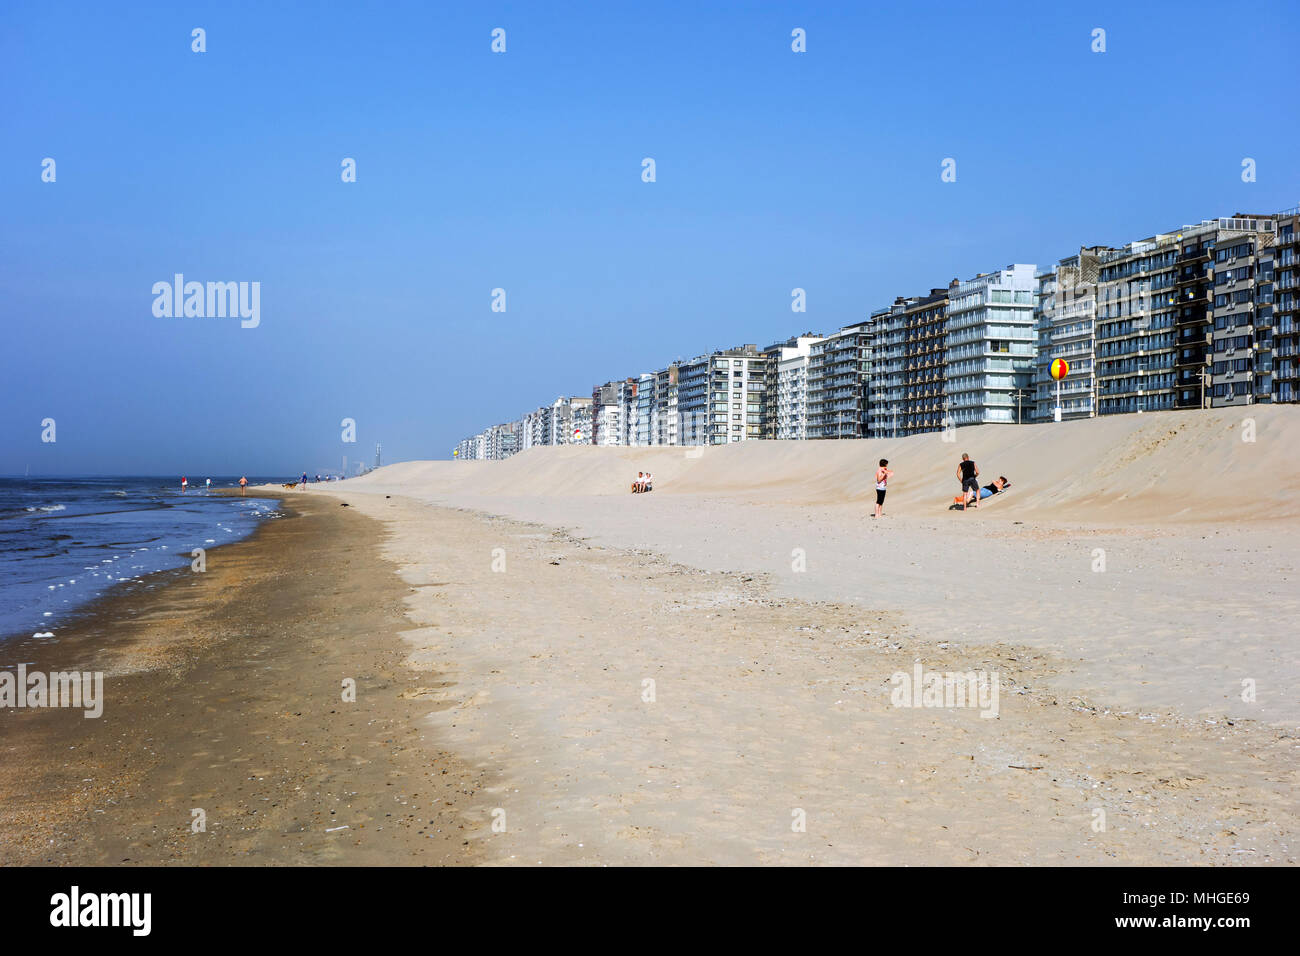 Beach nourishment project and flats / apartment blocks at seaside resort Middelkerke, West Flanders, Belgium Stock Photo